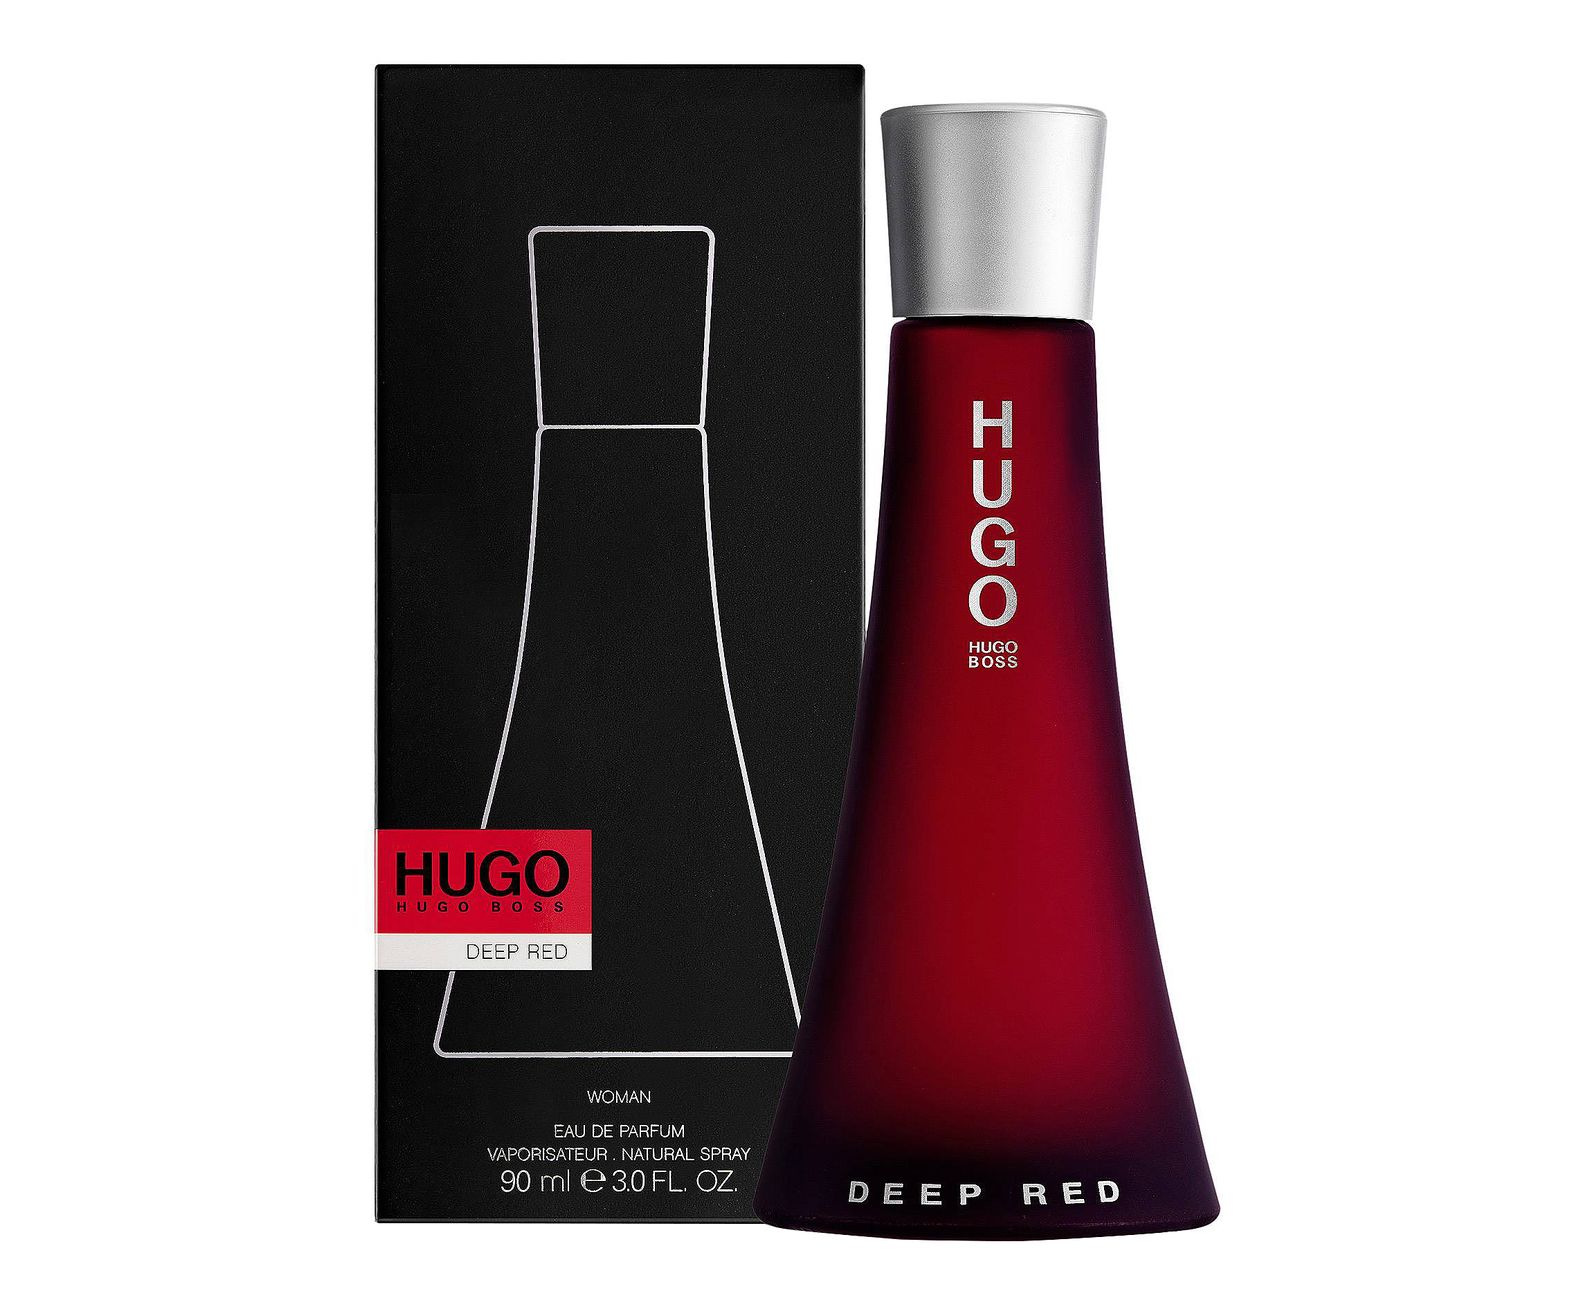 Хуго босс ред. Boss Deep Red Lady 50ml EDP. Hugo Boss Hugo Deep Red 50 ml. Hugo Boss Deep Red/парфюмерная вода/90ml.. Hugo Boss Deep Red 100 ml.